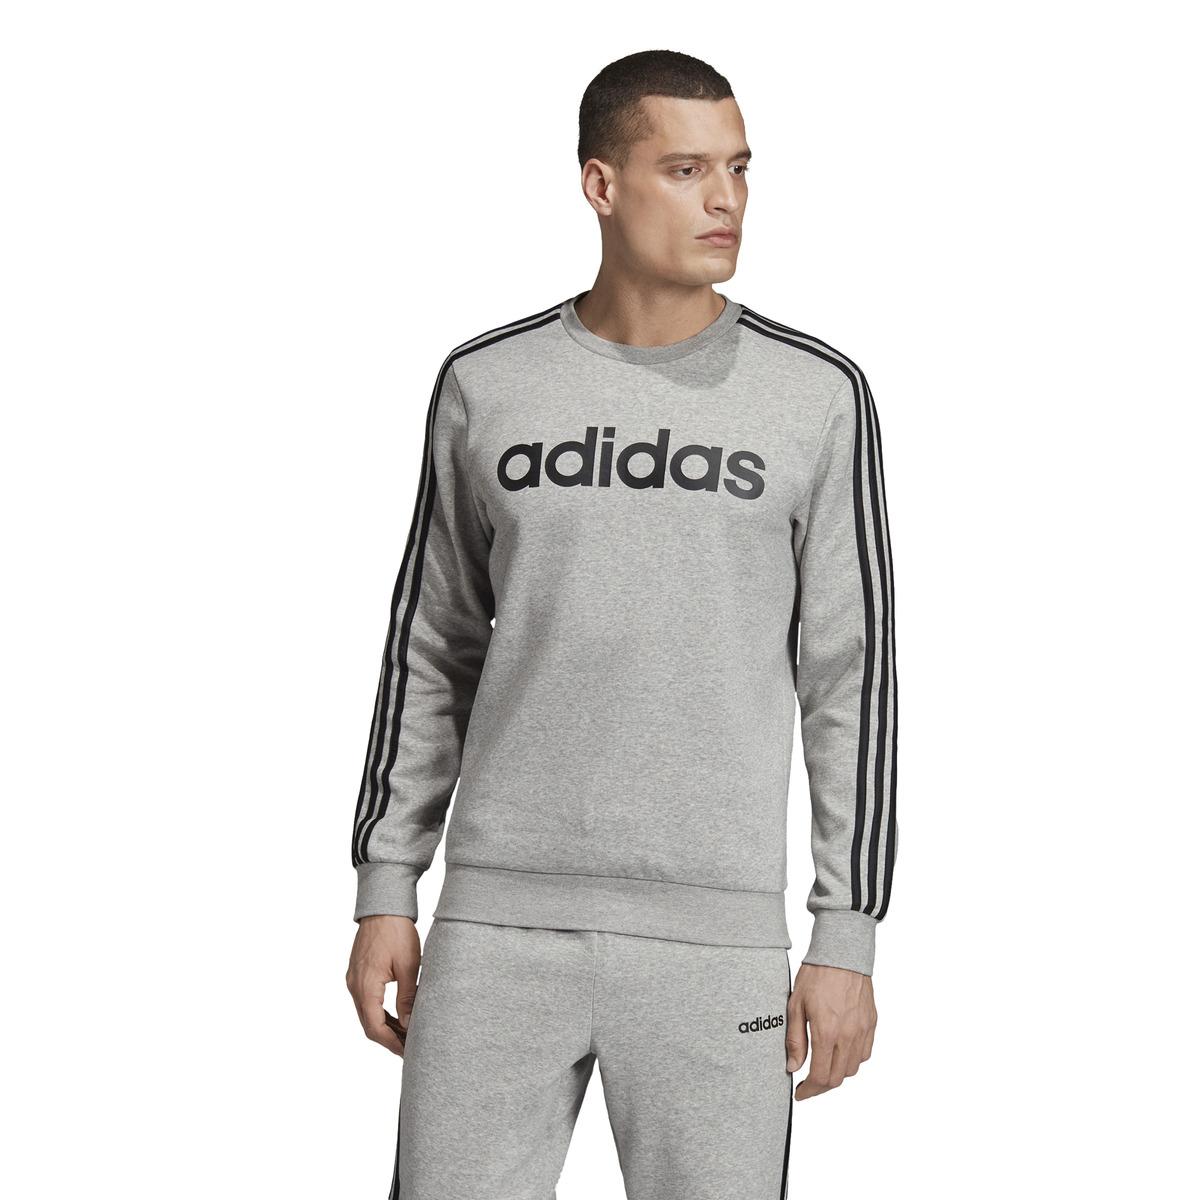 adidas Essentials 3 Stripe Sweatshirt in Grey (Gray) for Men - Lyst